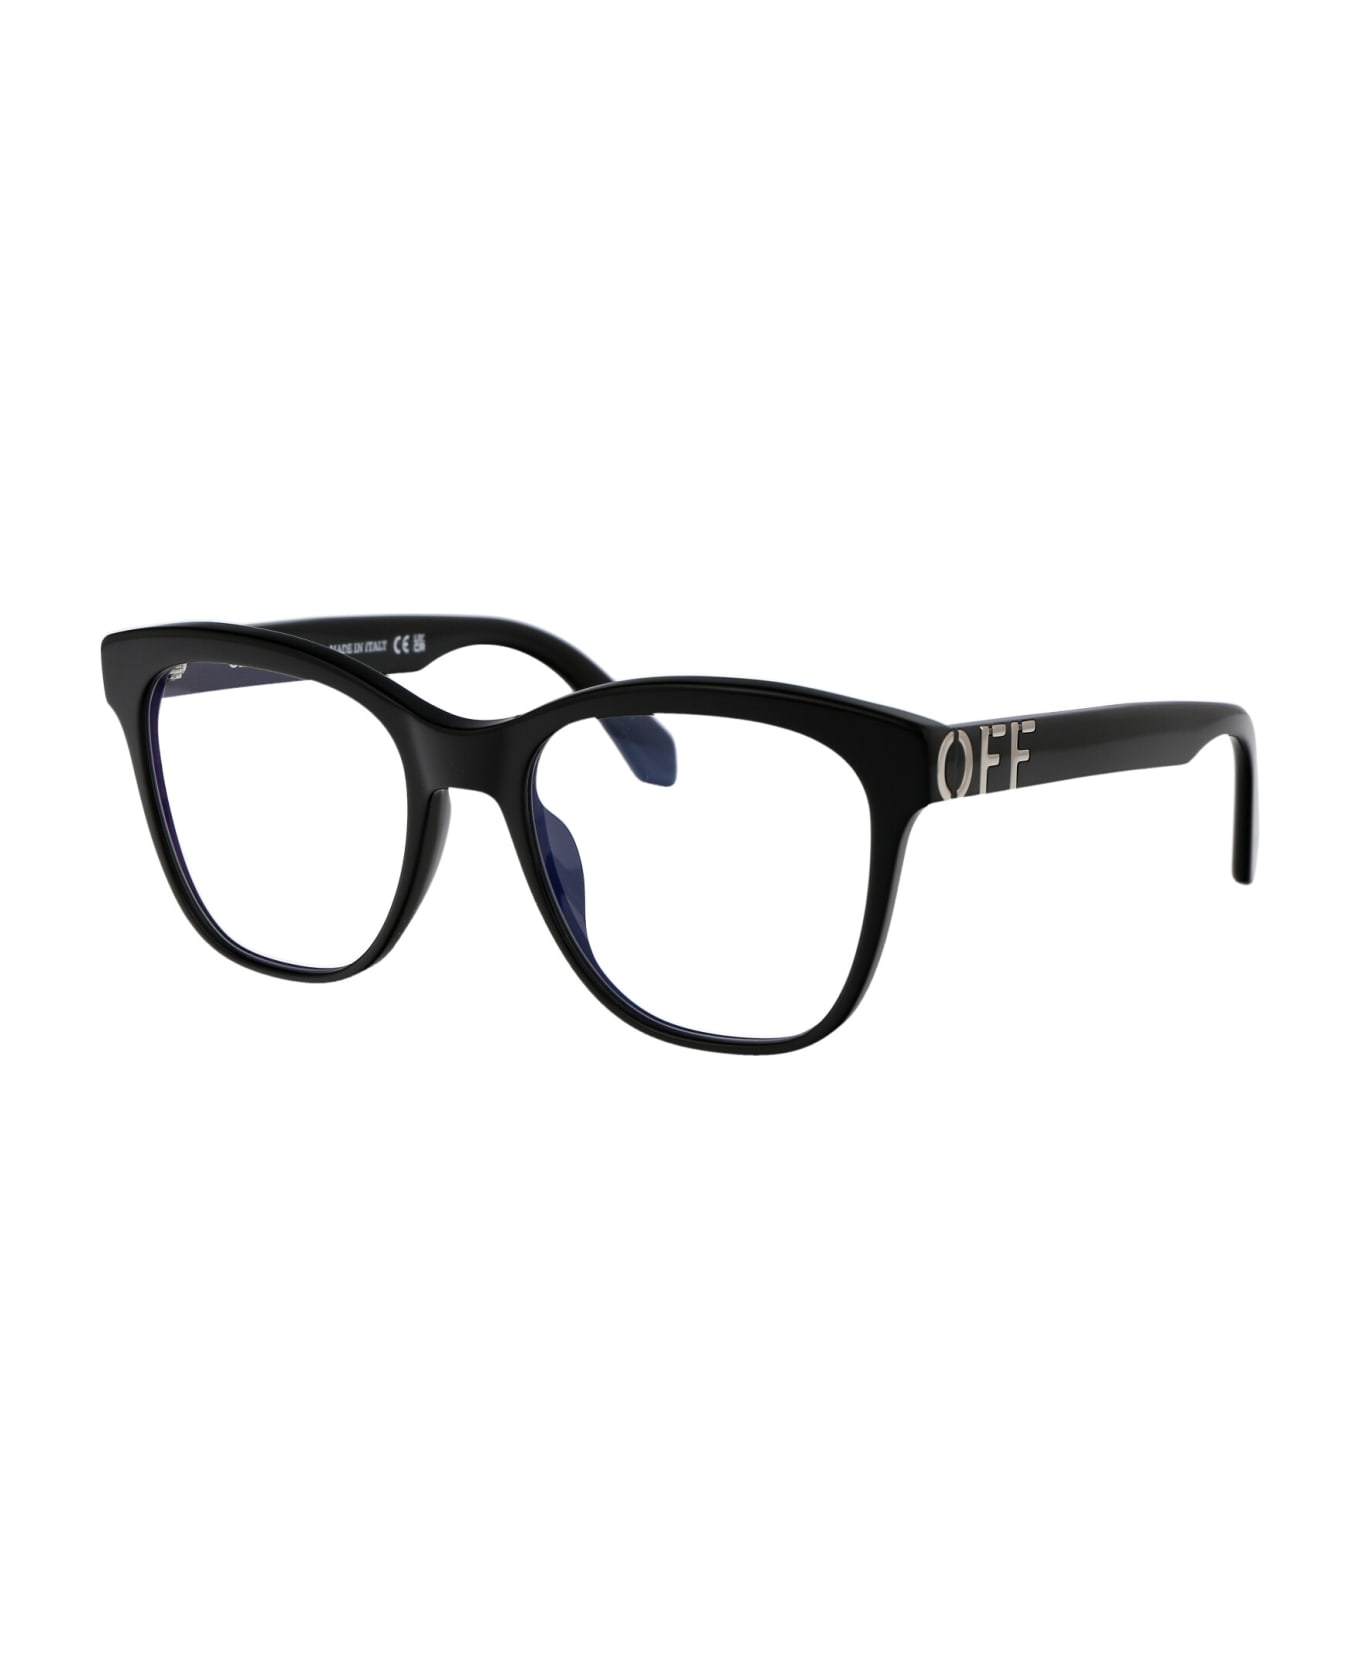 Off-White Optical Style 69 Glasses - 1000 BLACK